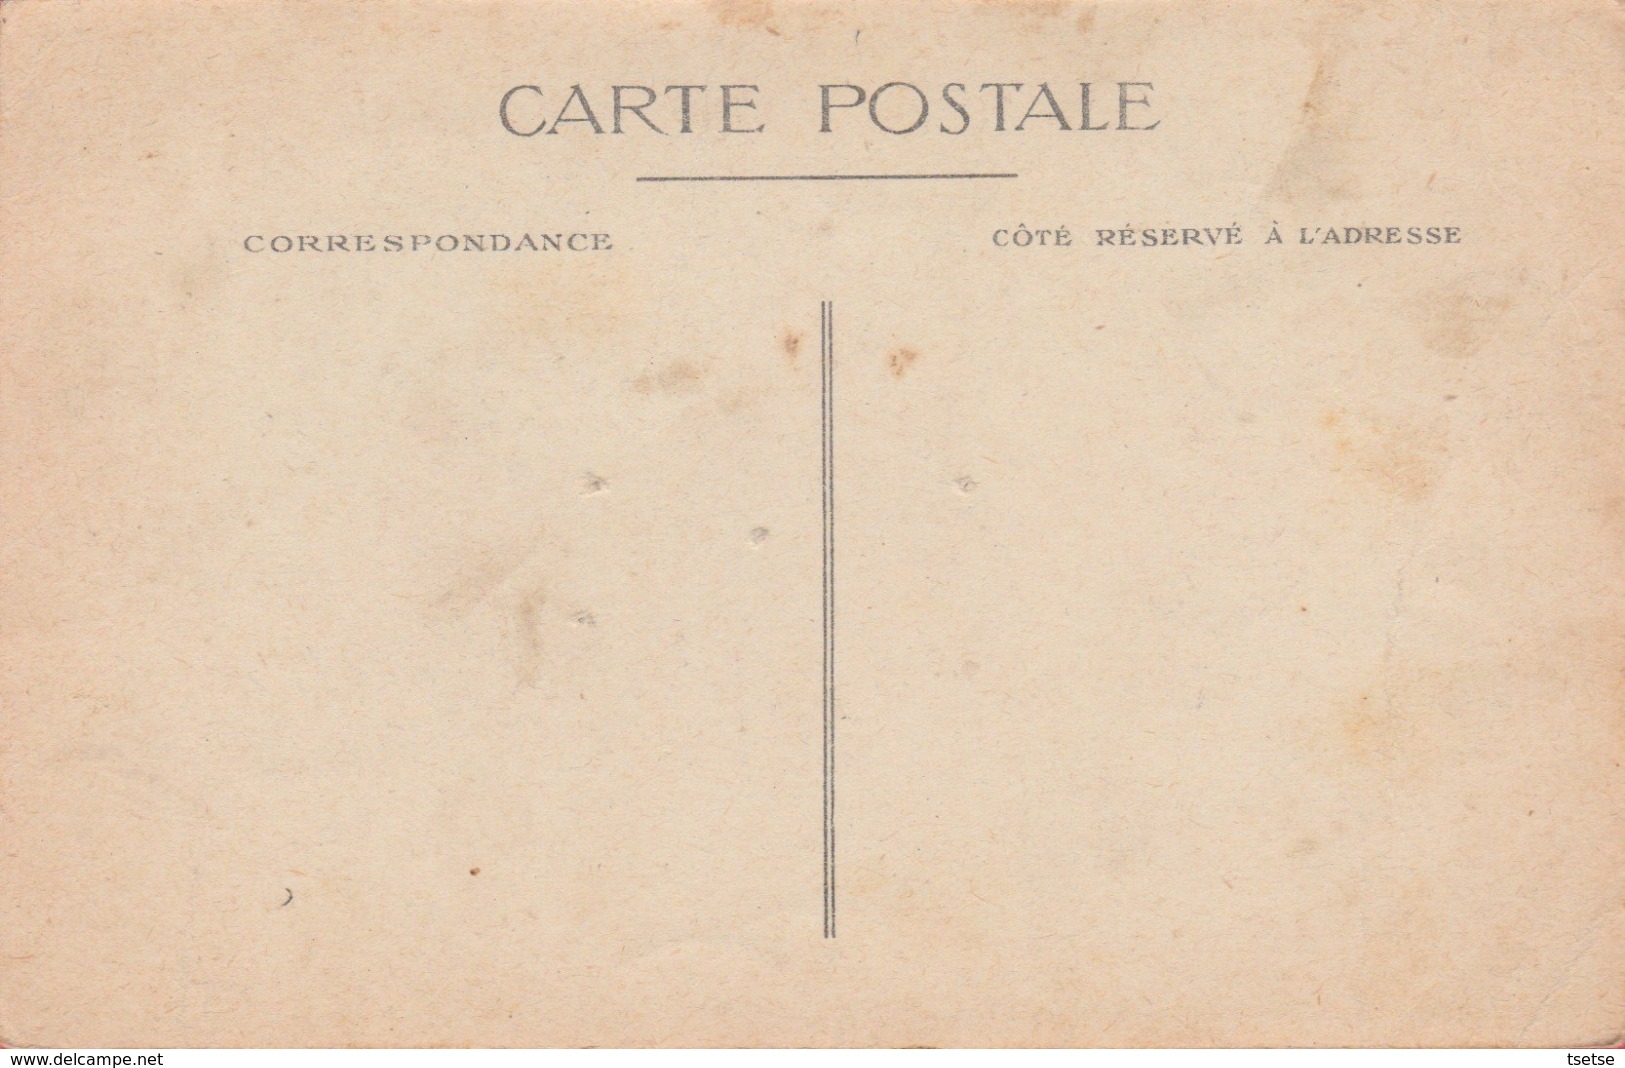 Carte Postale Pub (Repro) - Savon Bébé Cadum